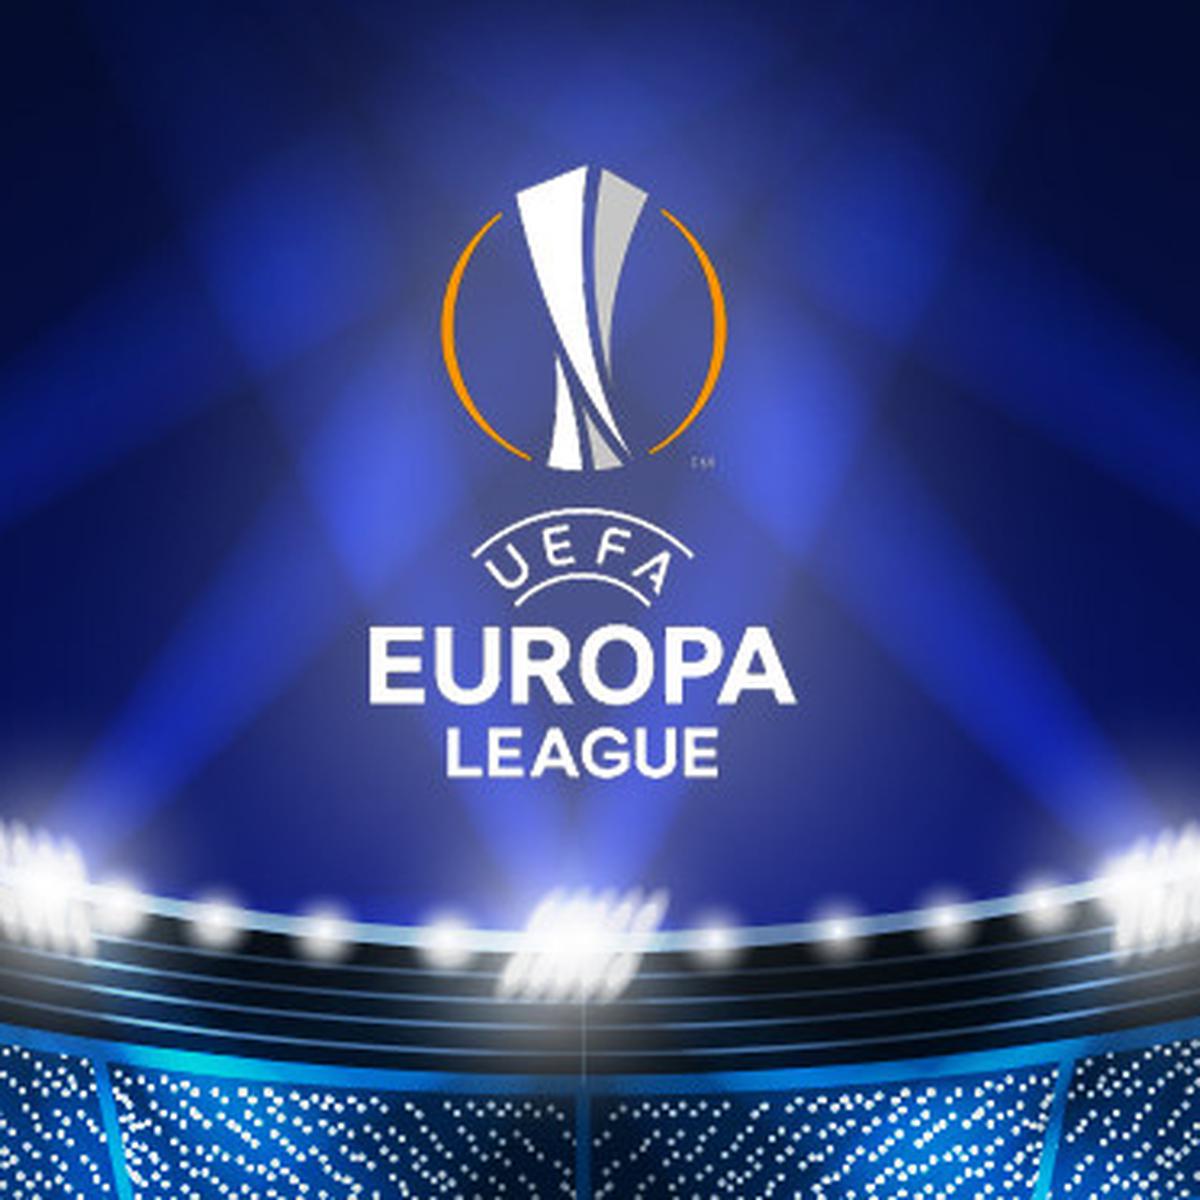 jadwal final liga europa 2021